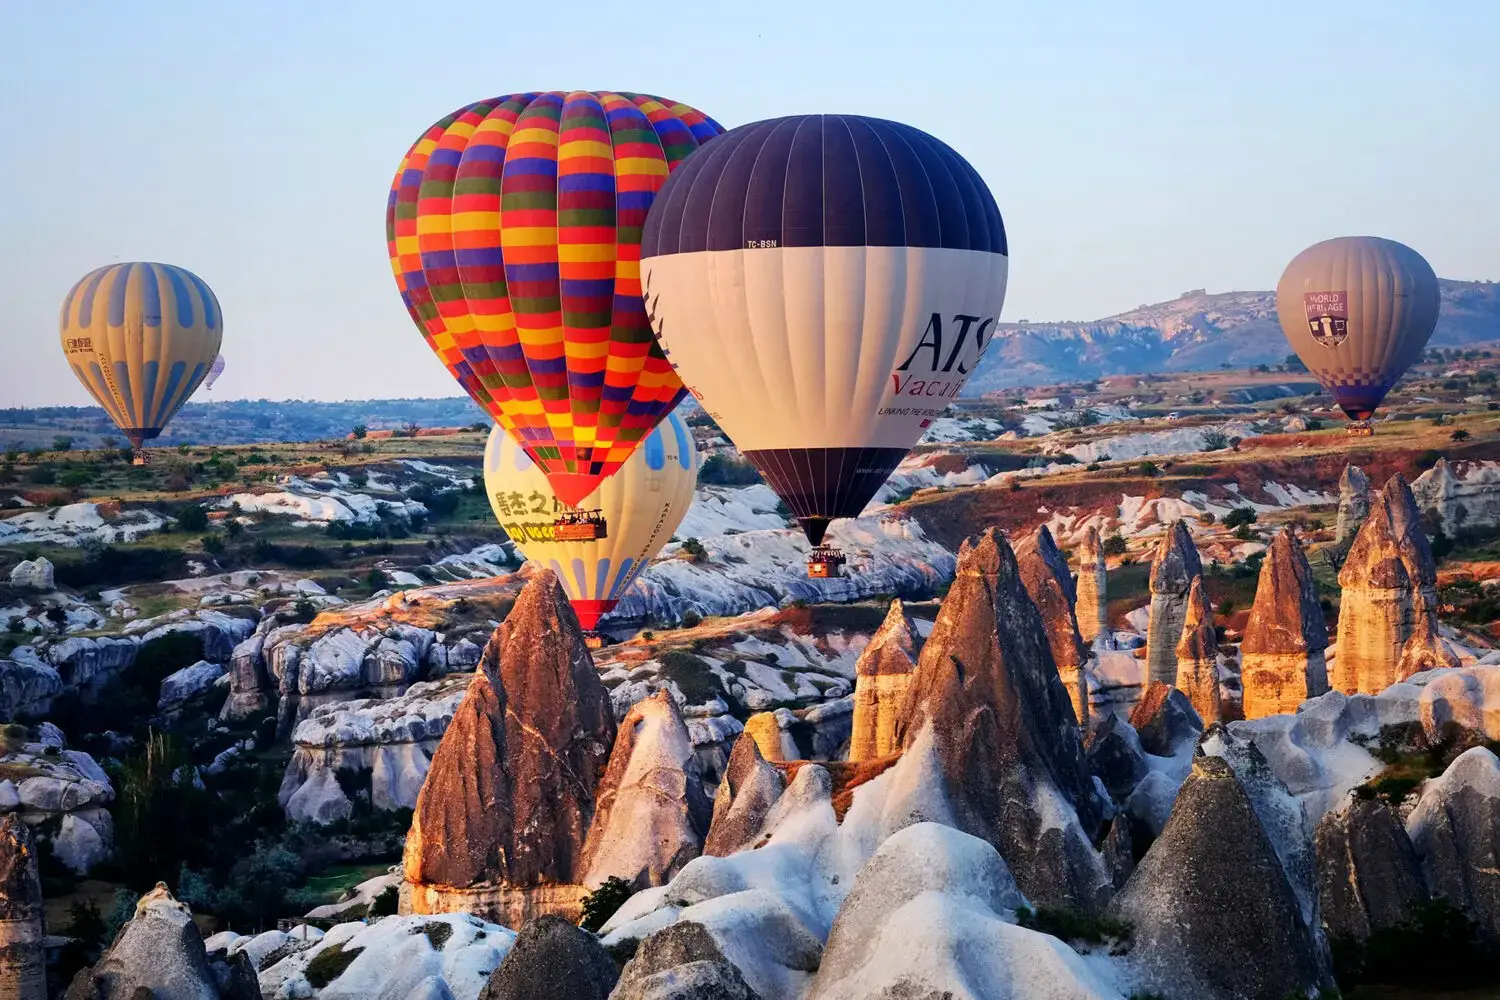 Where to stay in Cappadocia hot air balloon?